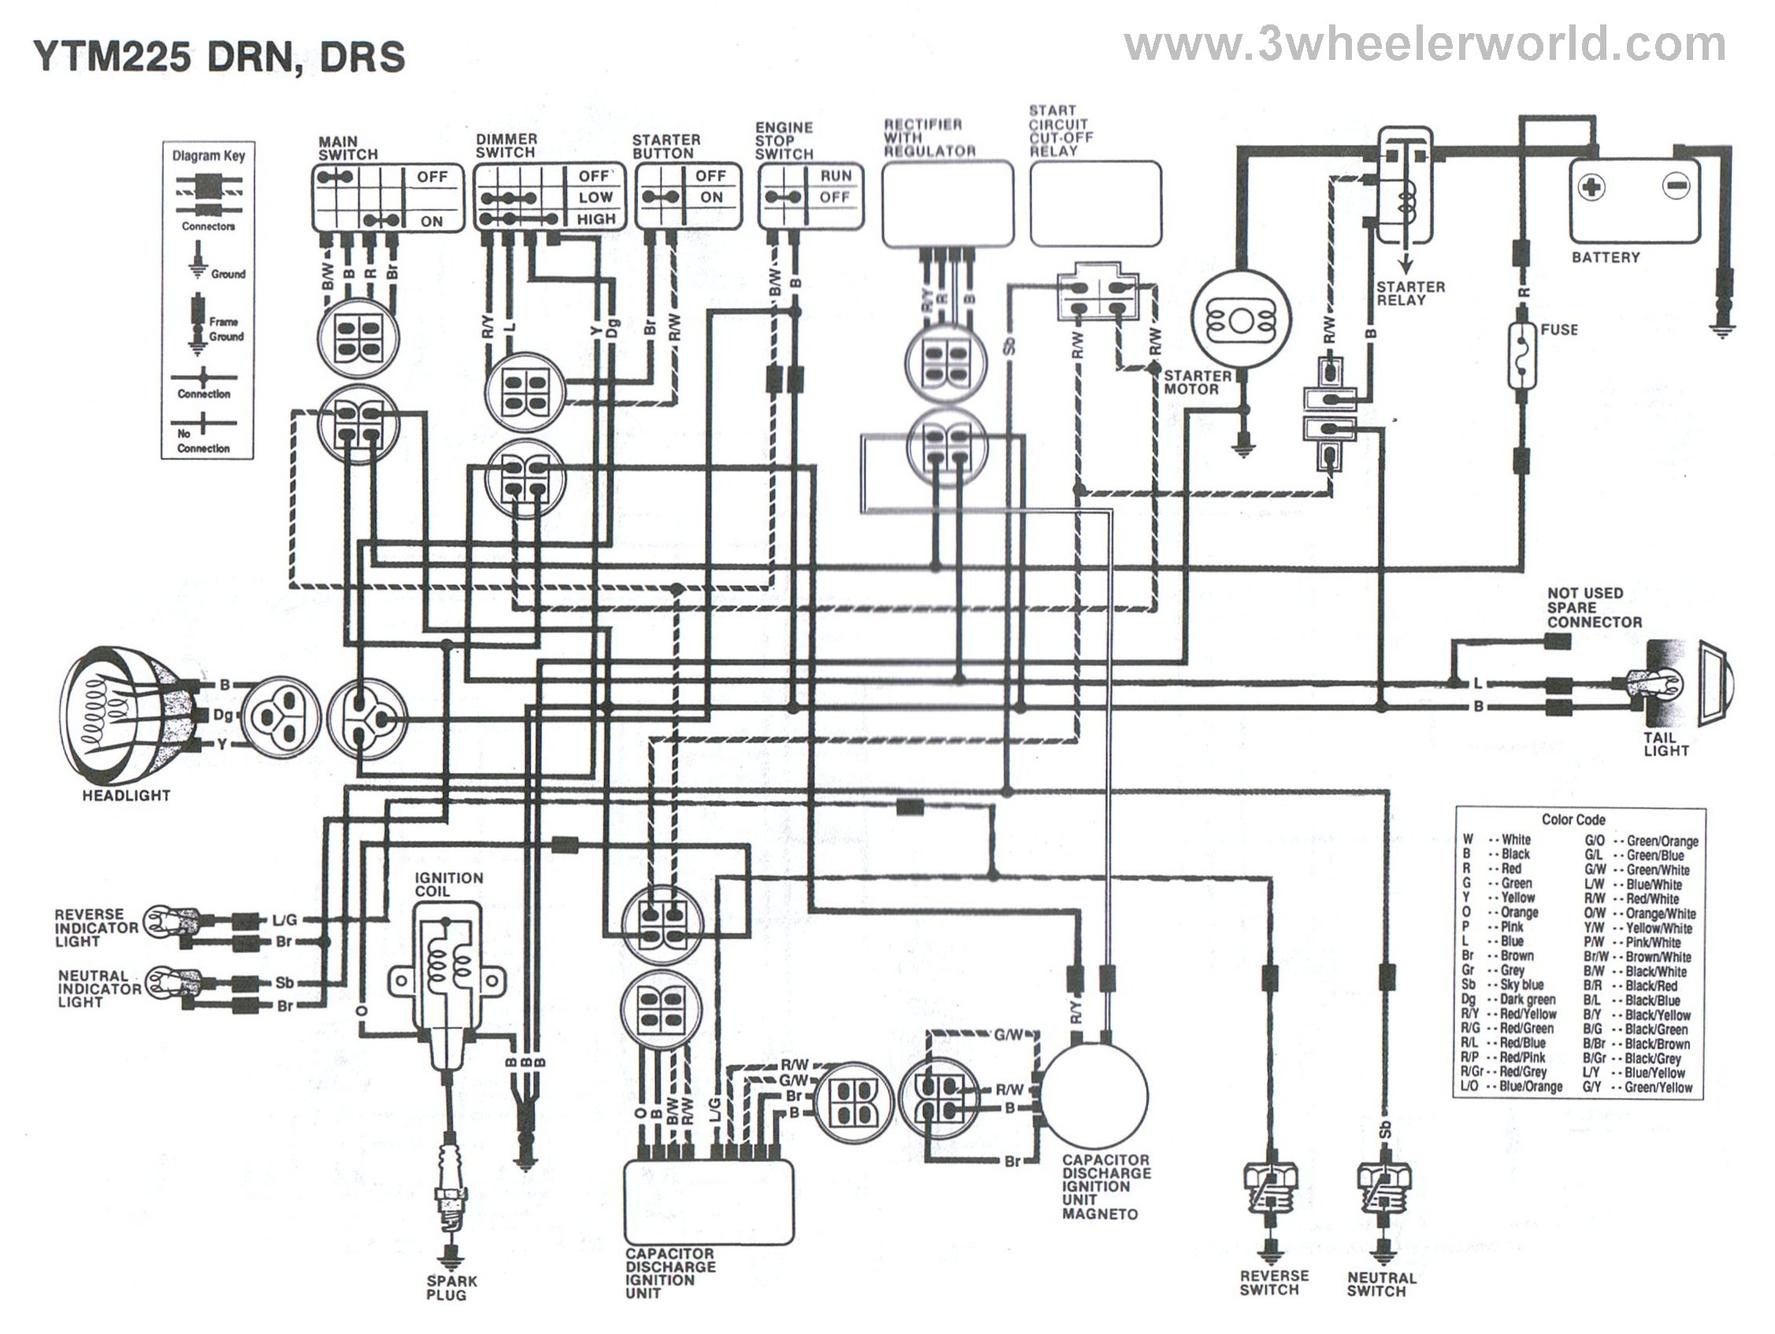 1984 fxwg wiring diagram - Wiring Diagram